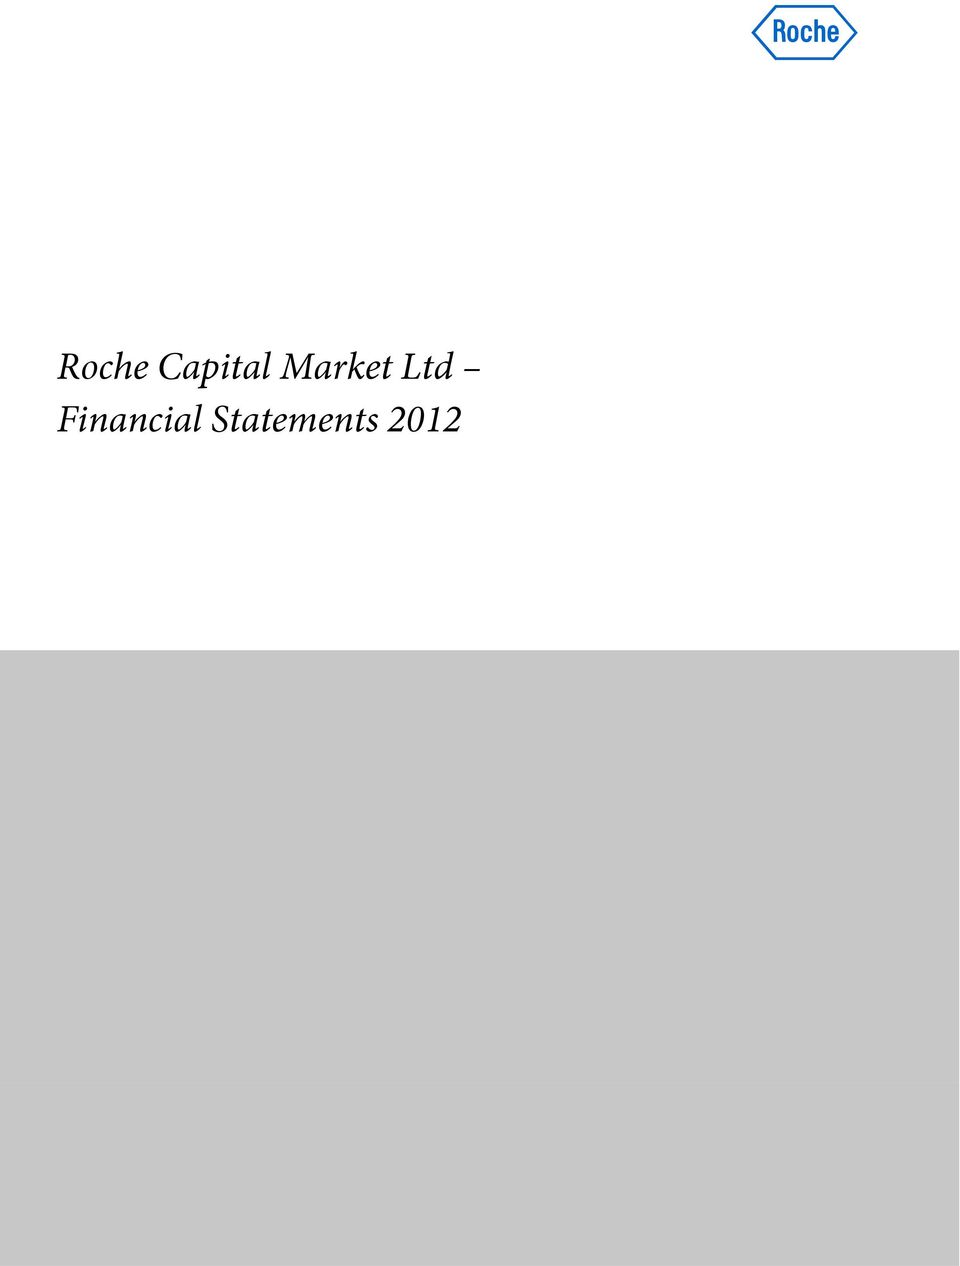 1 Roche Capital Market Ltd